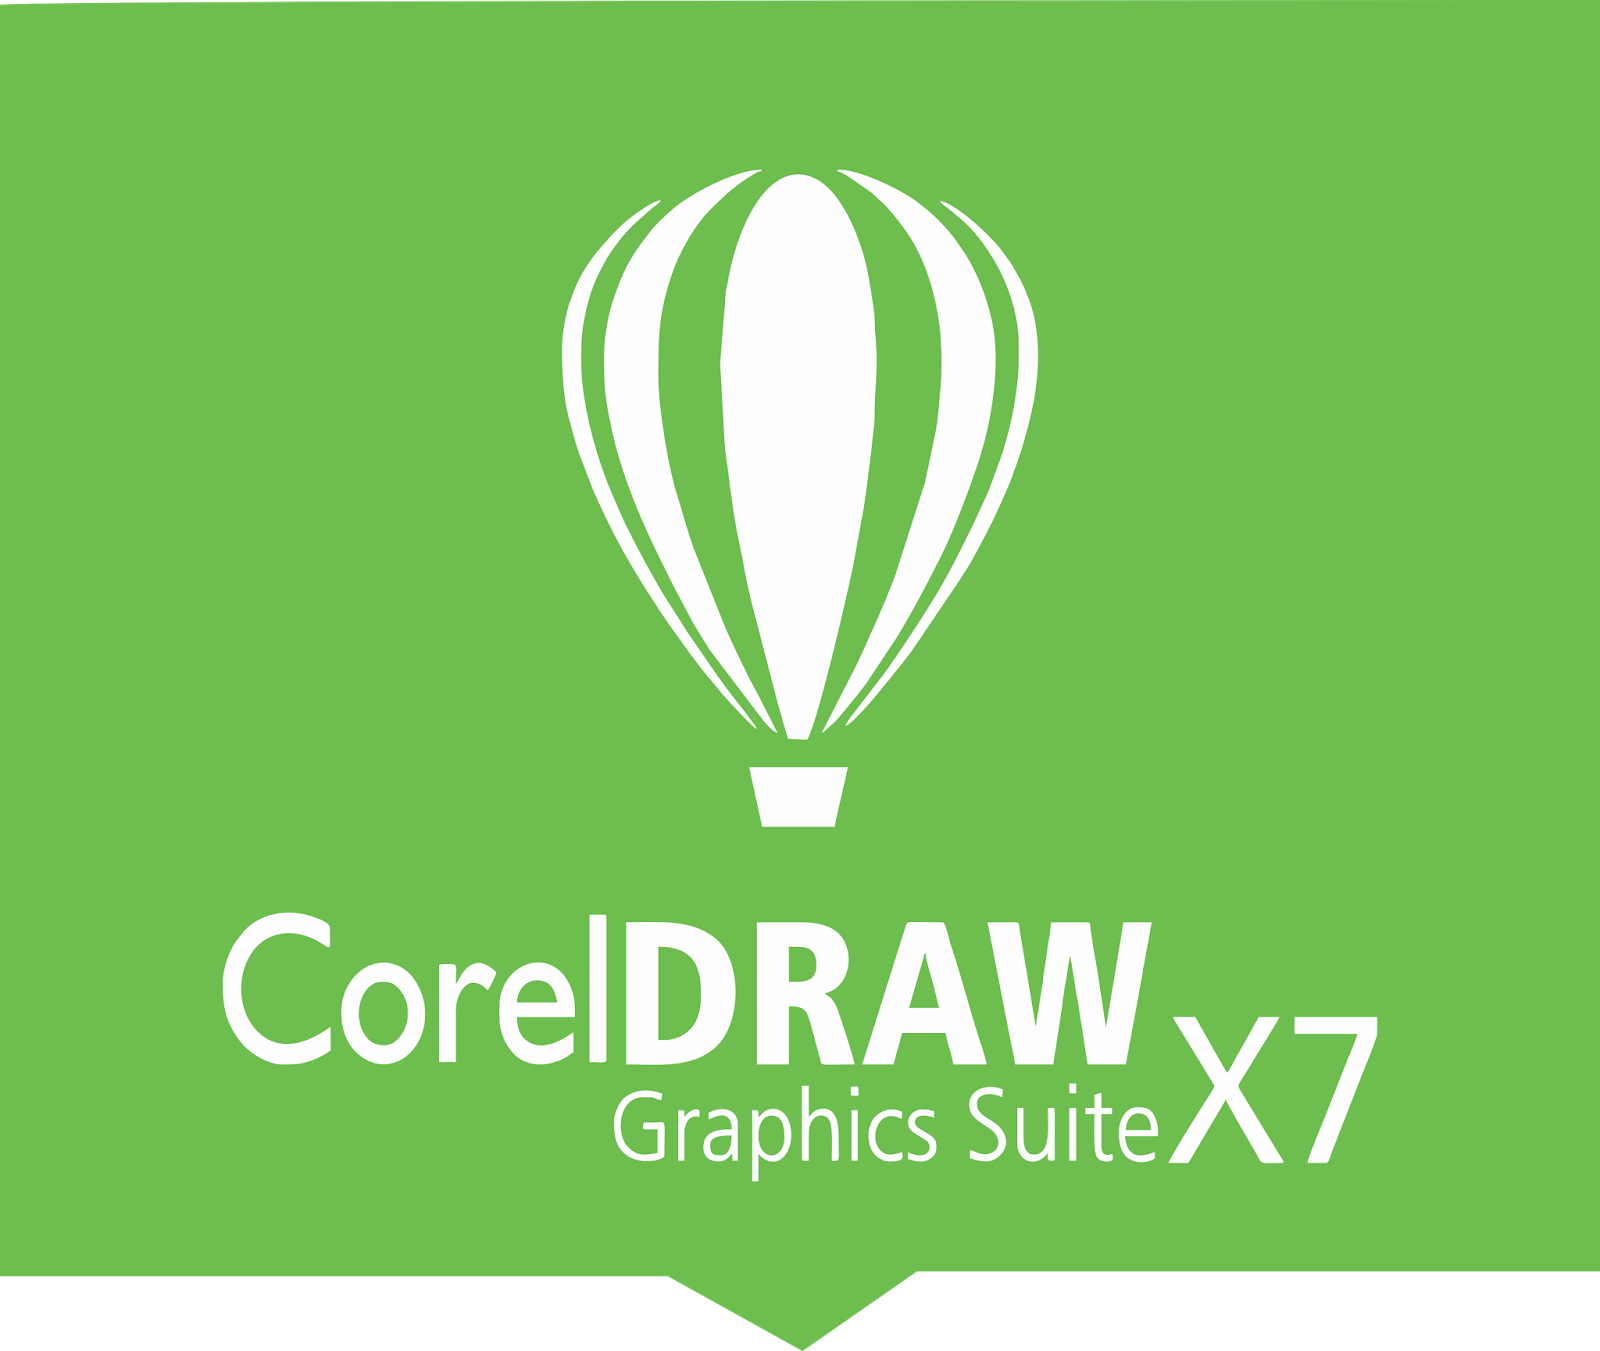 Corel suite. Coreldraw. Coreldraw логотип. Coreldraw Graphics Suite логотип. Значок Корела.